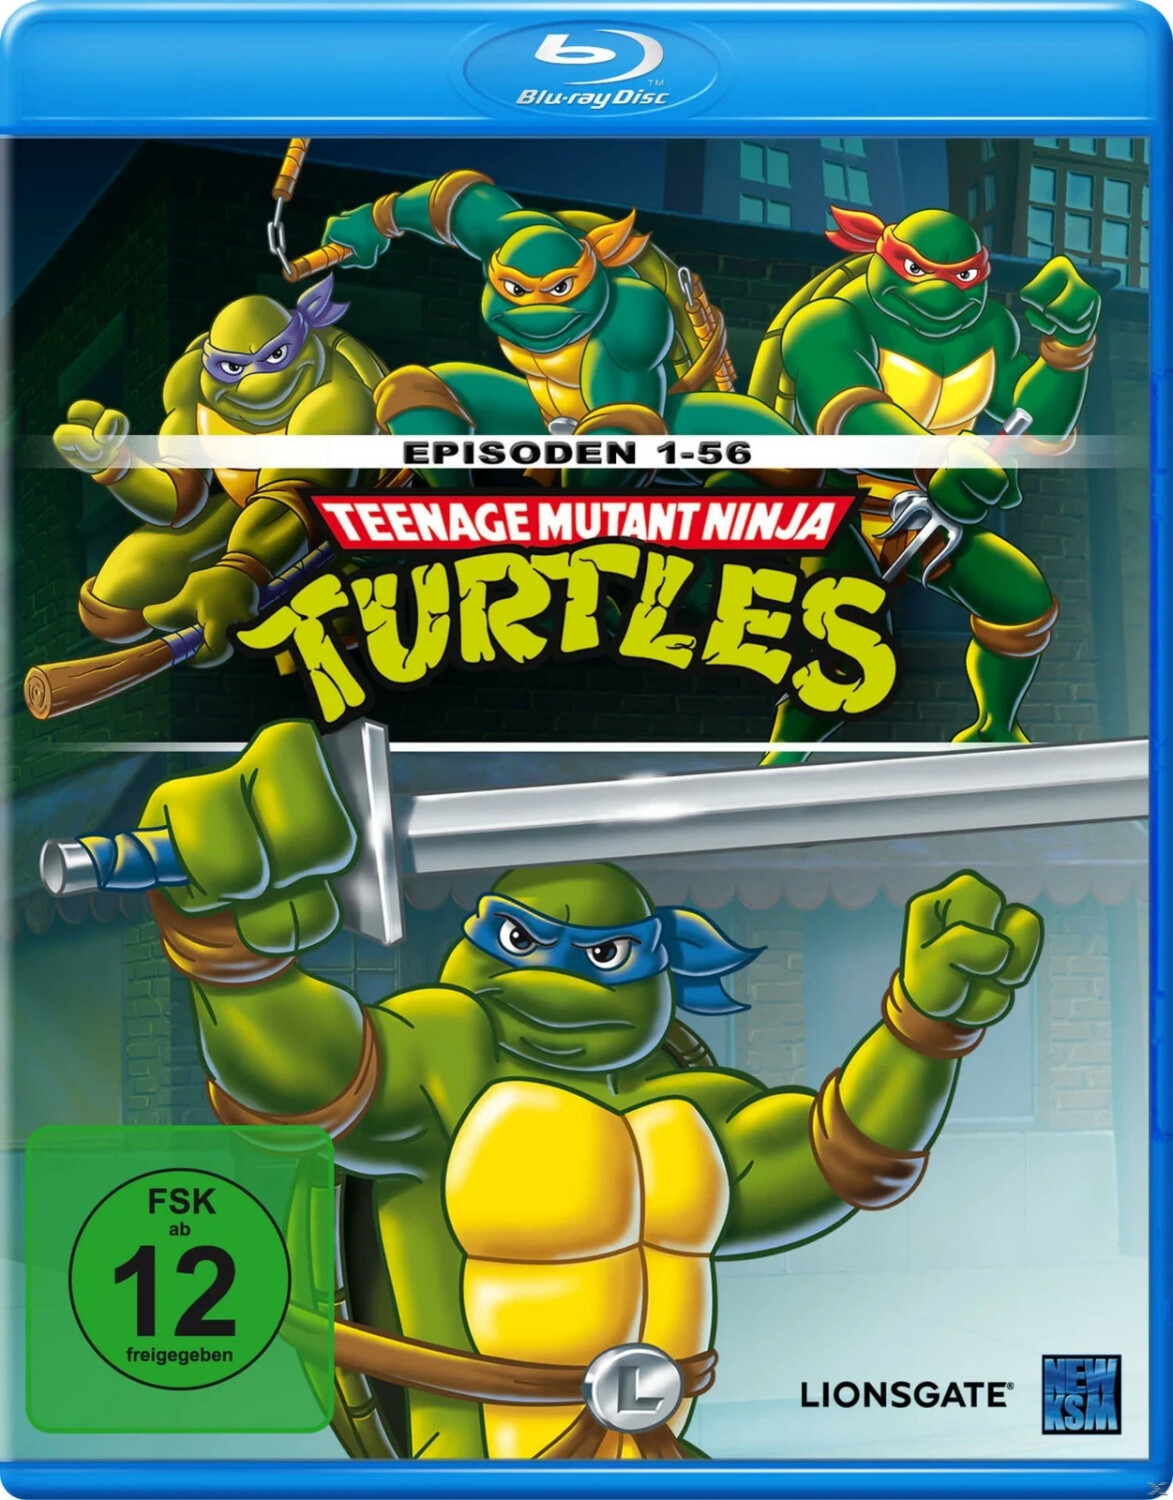 Teenage Mutant Ninja Turtles Box 1 (Episode 1-56) [Blu-ray]